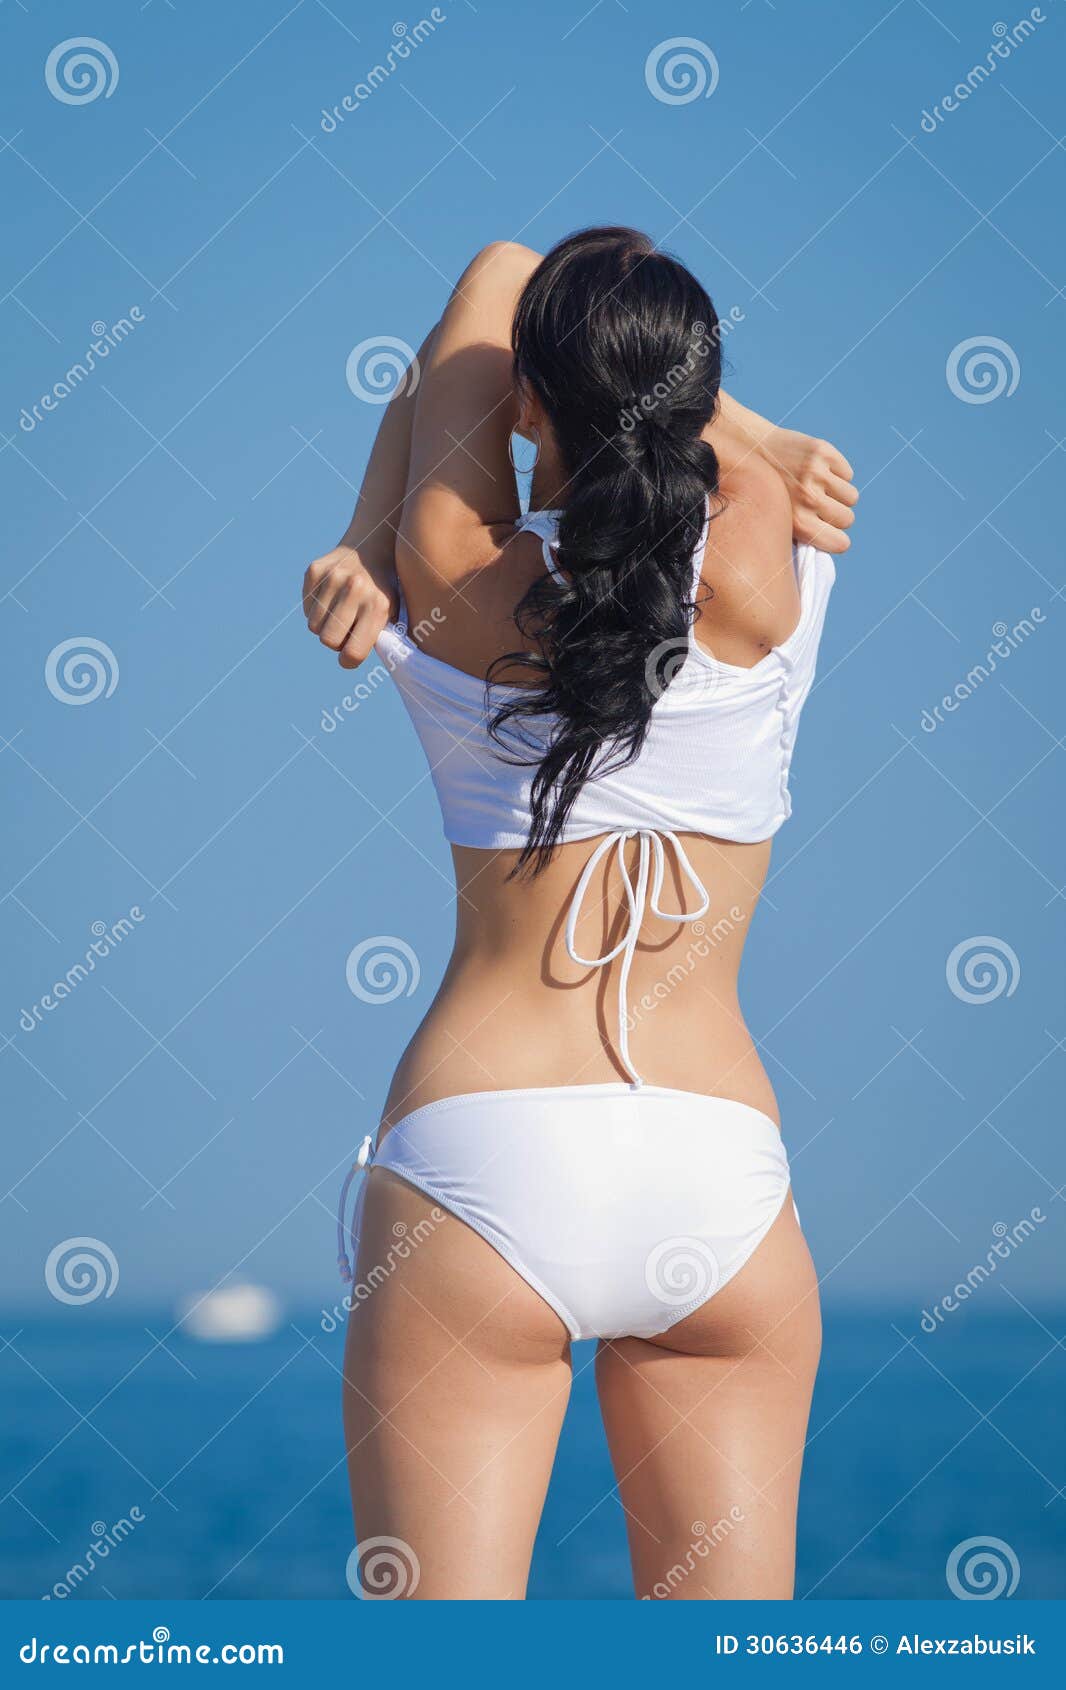 wife undressing bikini gallery